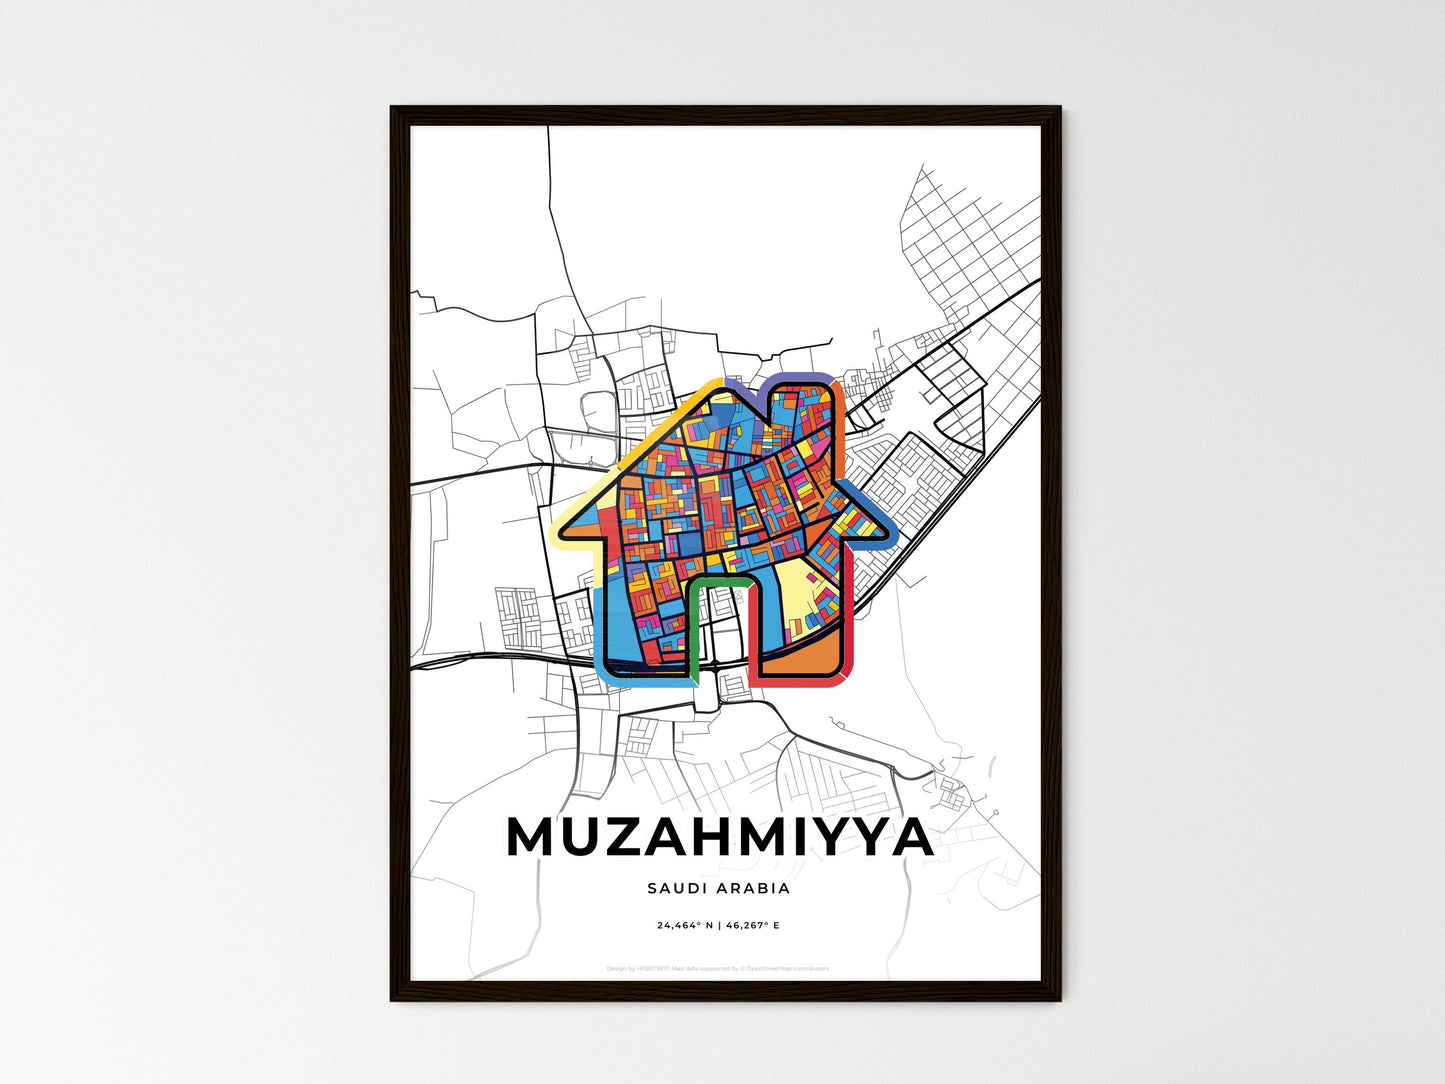 MUZAHMIYYA SAUDI ARABIA minimal art map with a colorful icon. Style 3